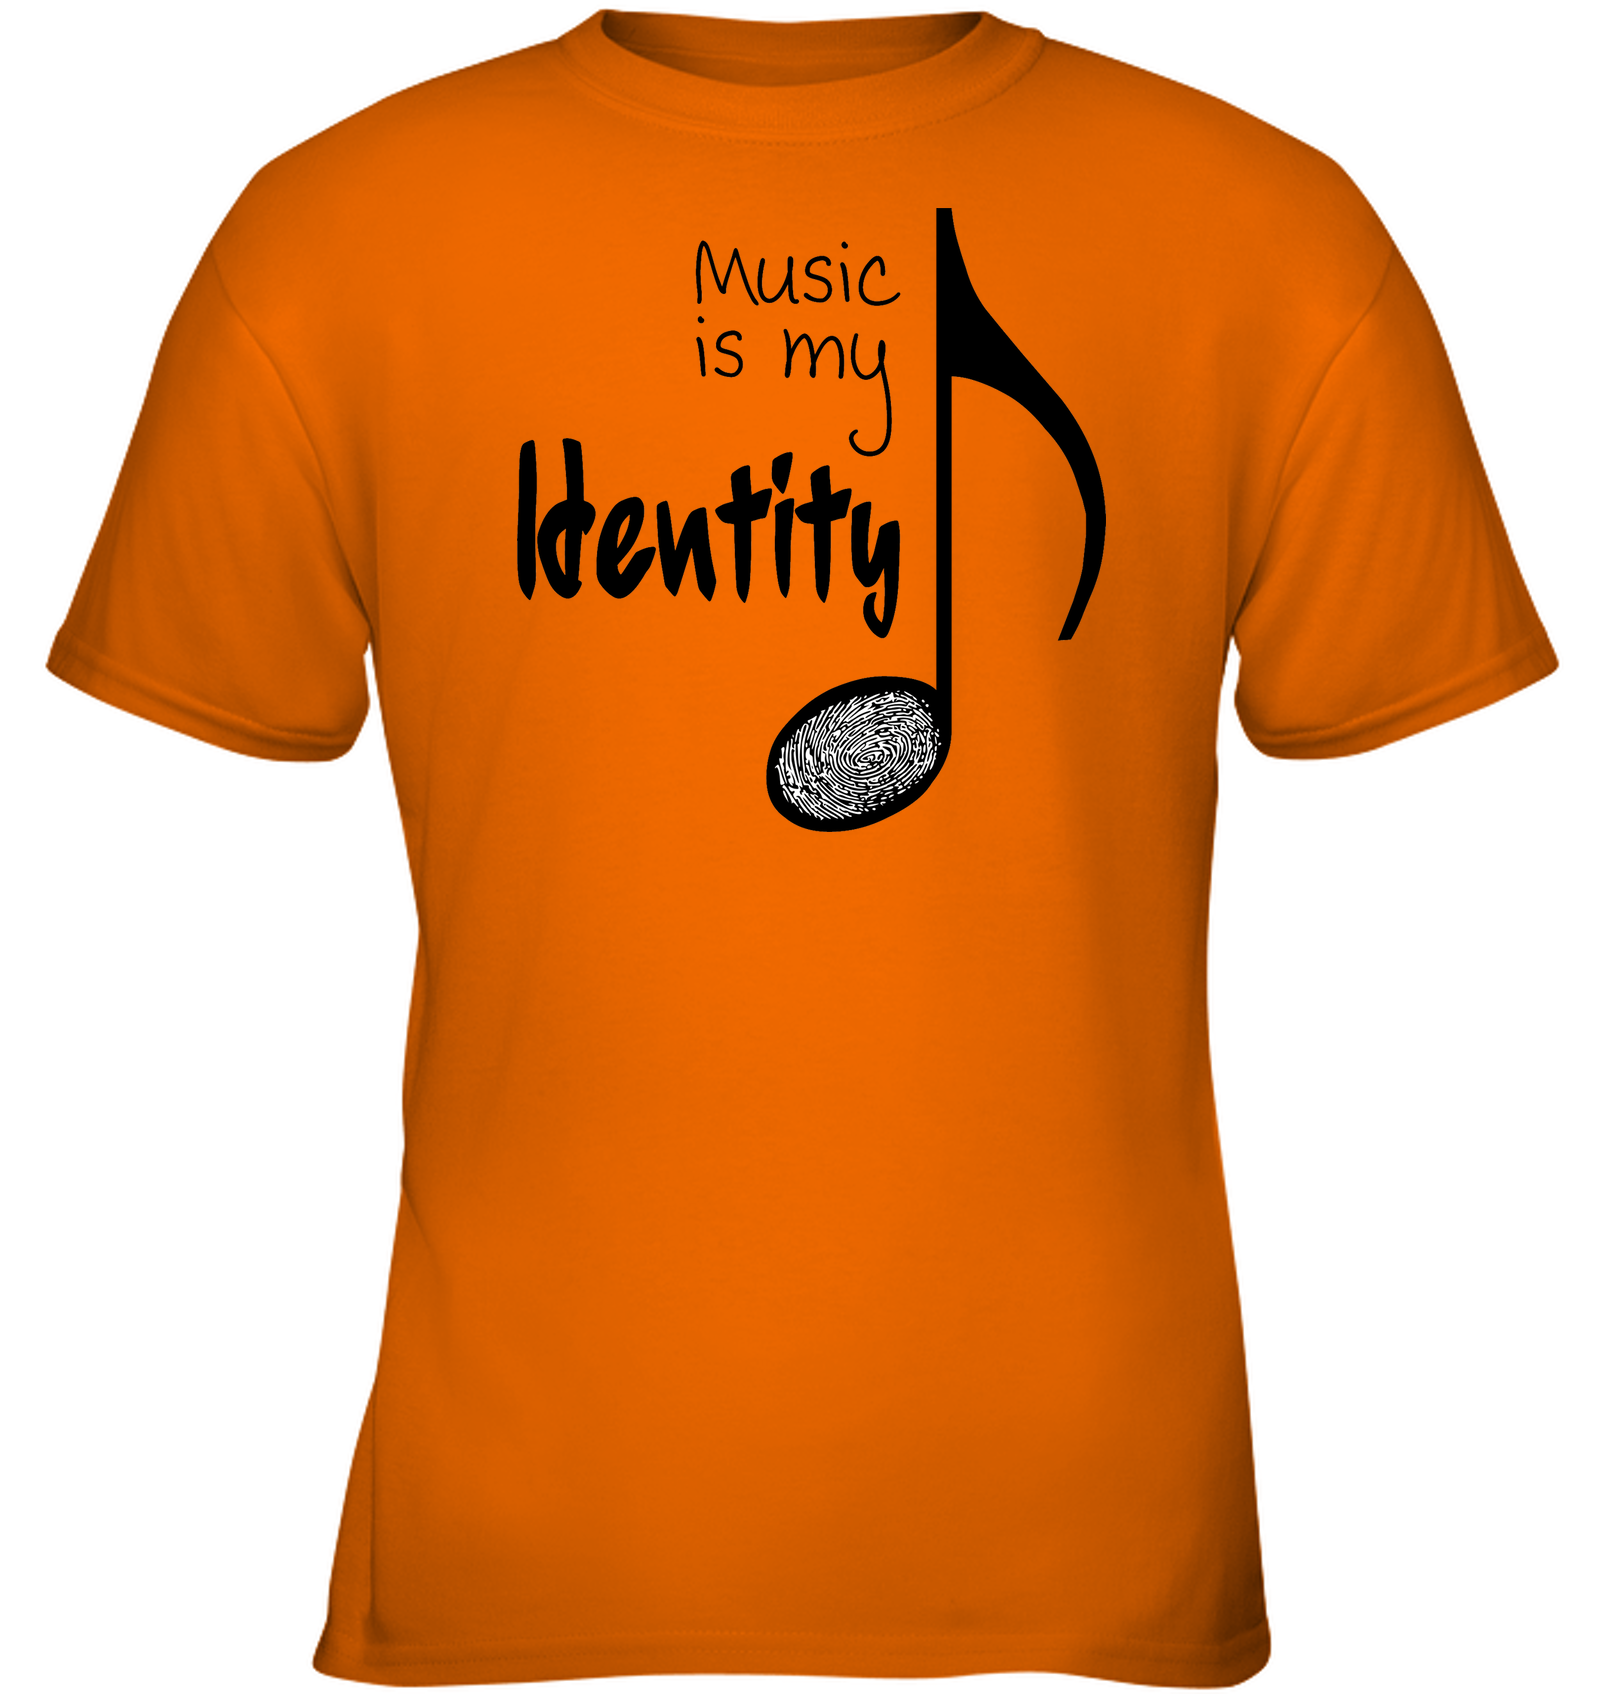 Music is my Identity - Gildan Youth Short Sleeve T-Shirt